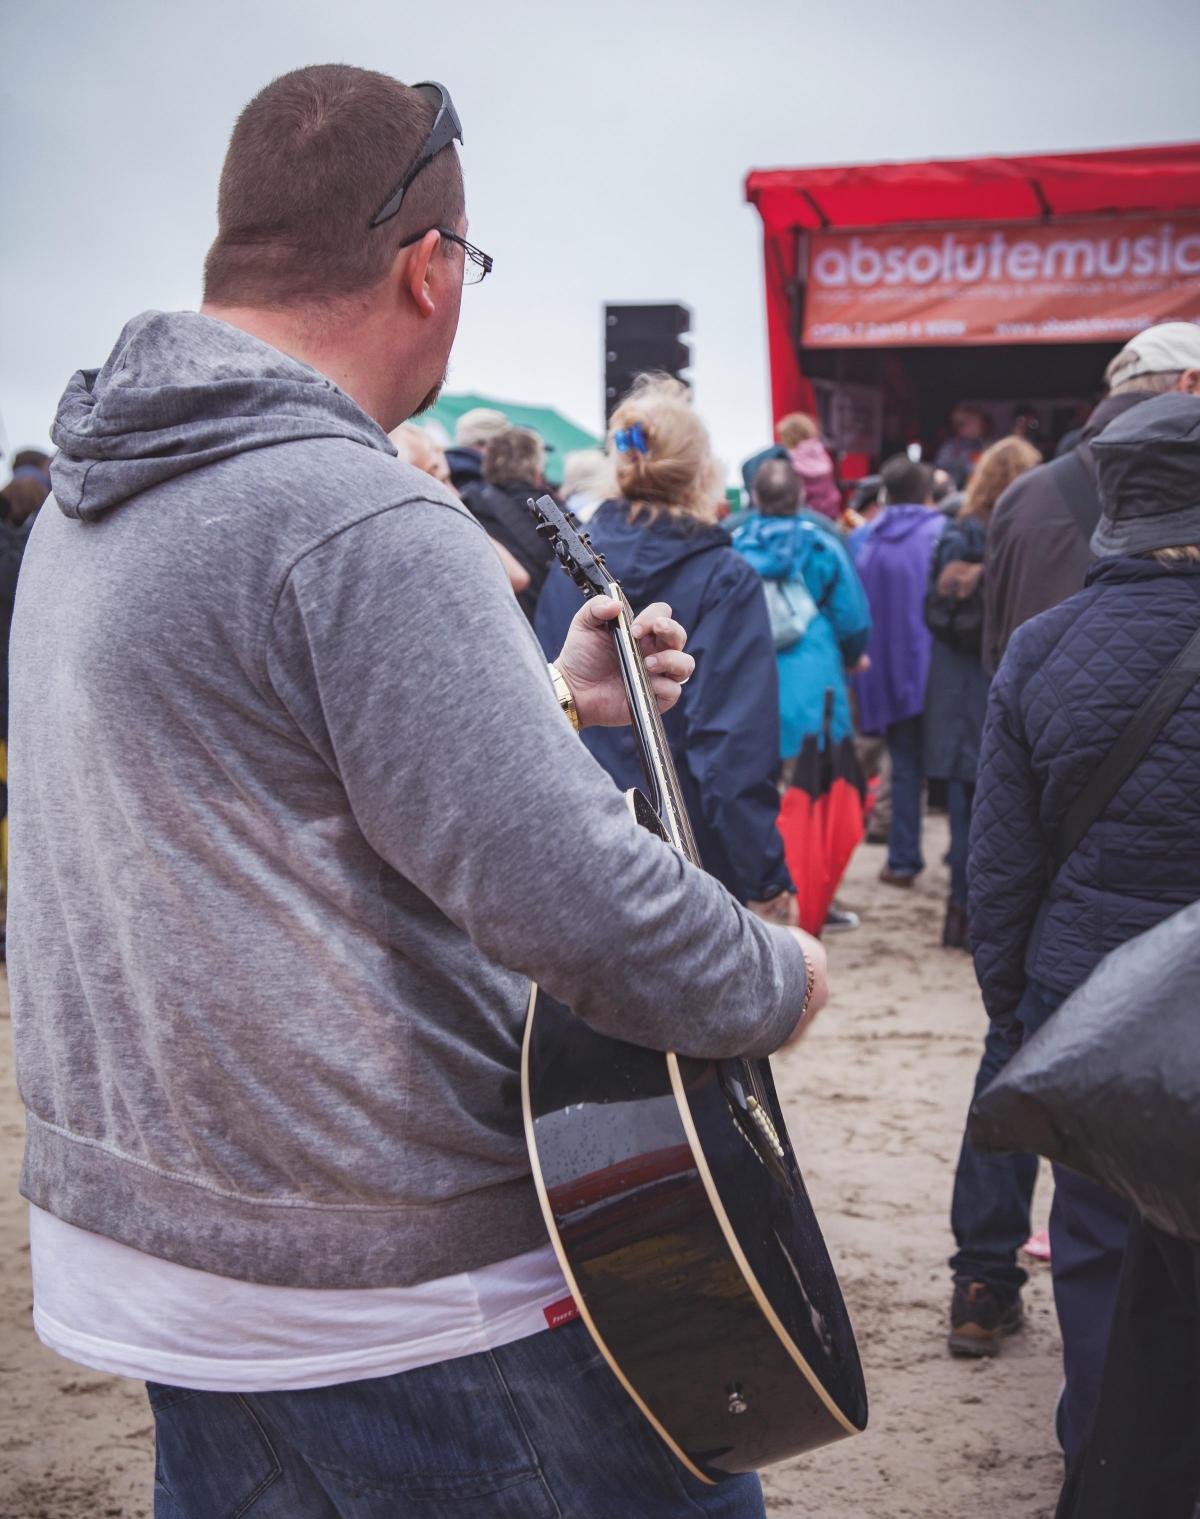 Guitars On The Beach / Food Rocks Festival 2016, Pictures: SIMON EMMETT PHOTOGRAPHY